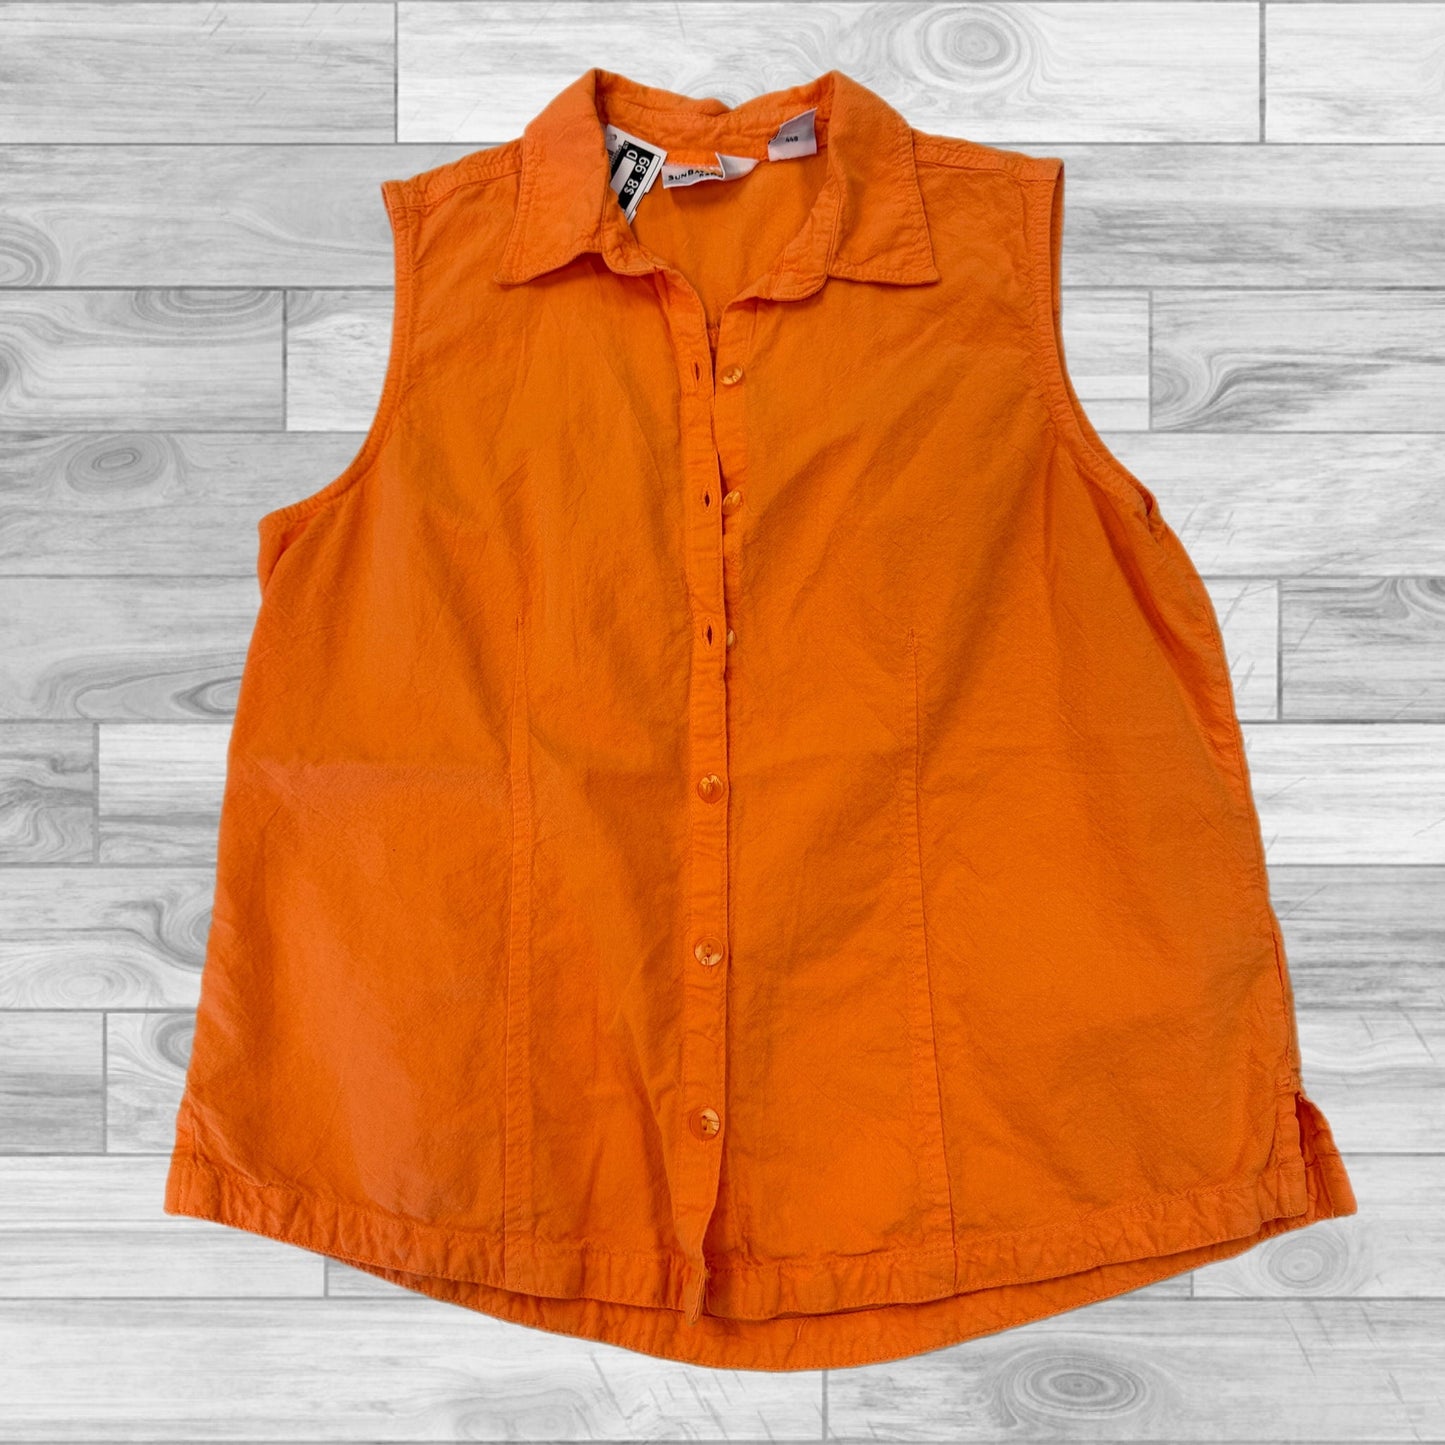 Orange Top Sleeveless Clothes Mentor, Size Petite  M